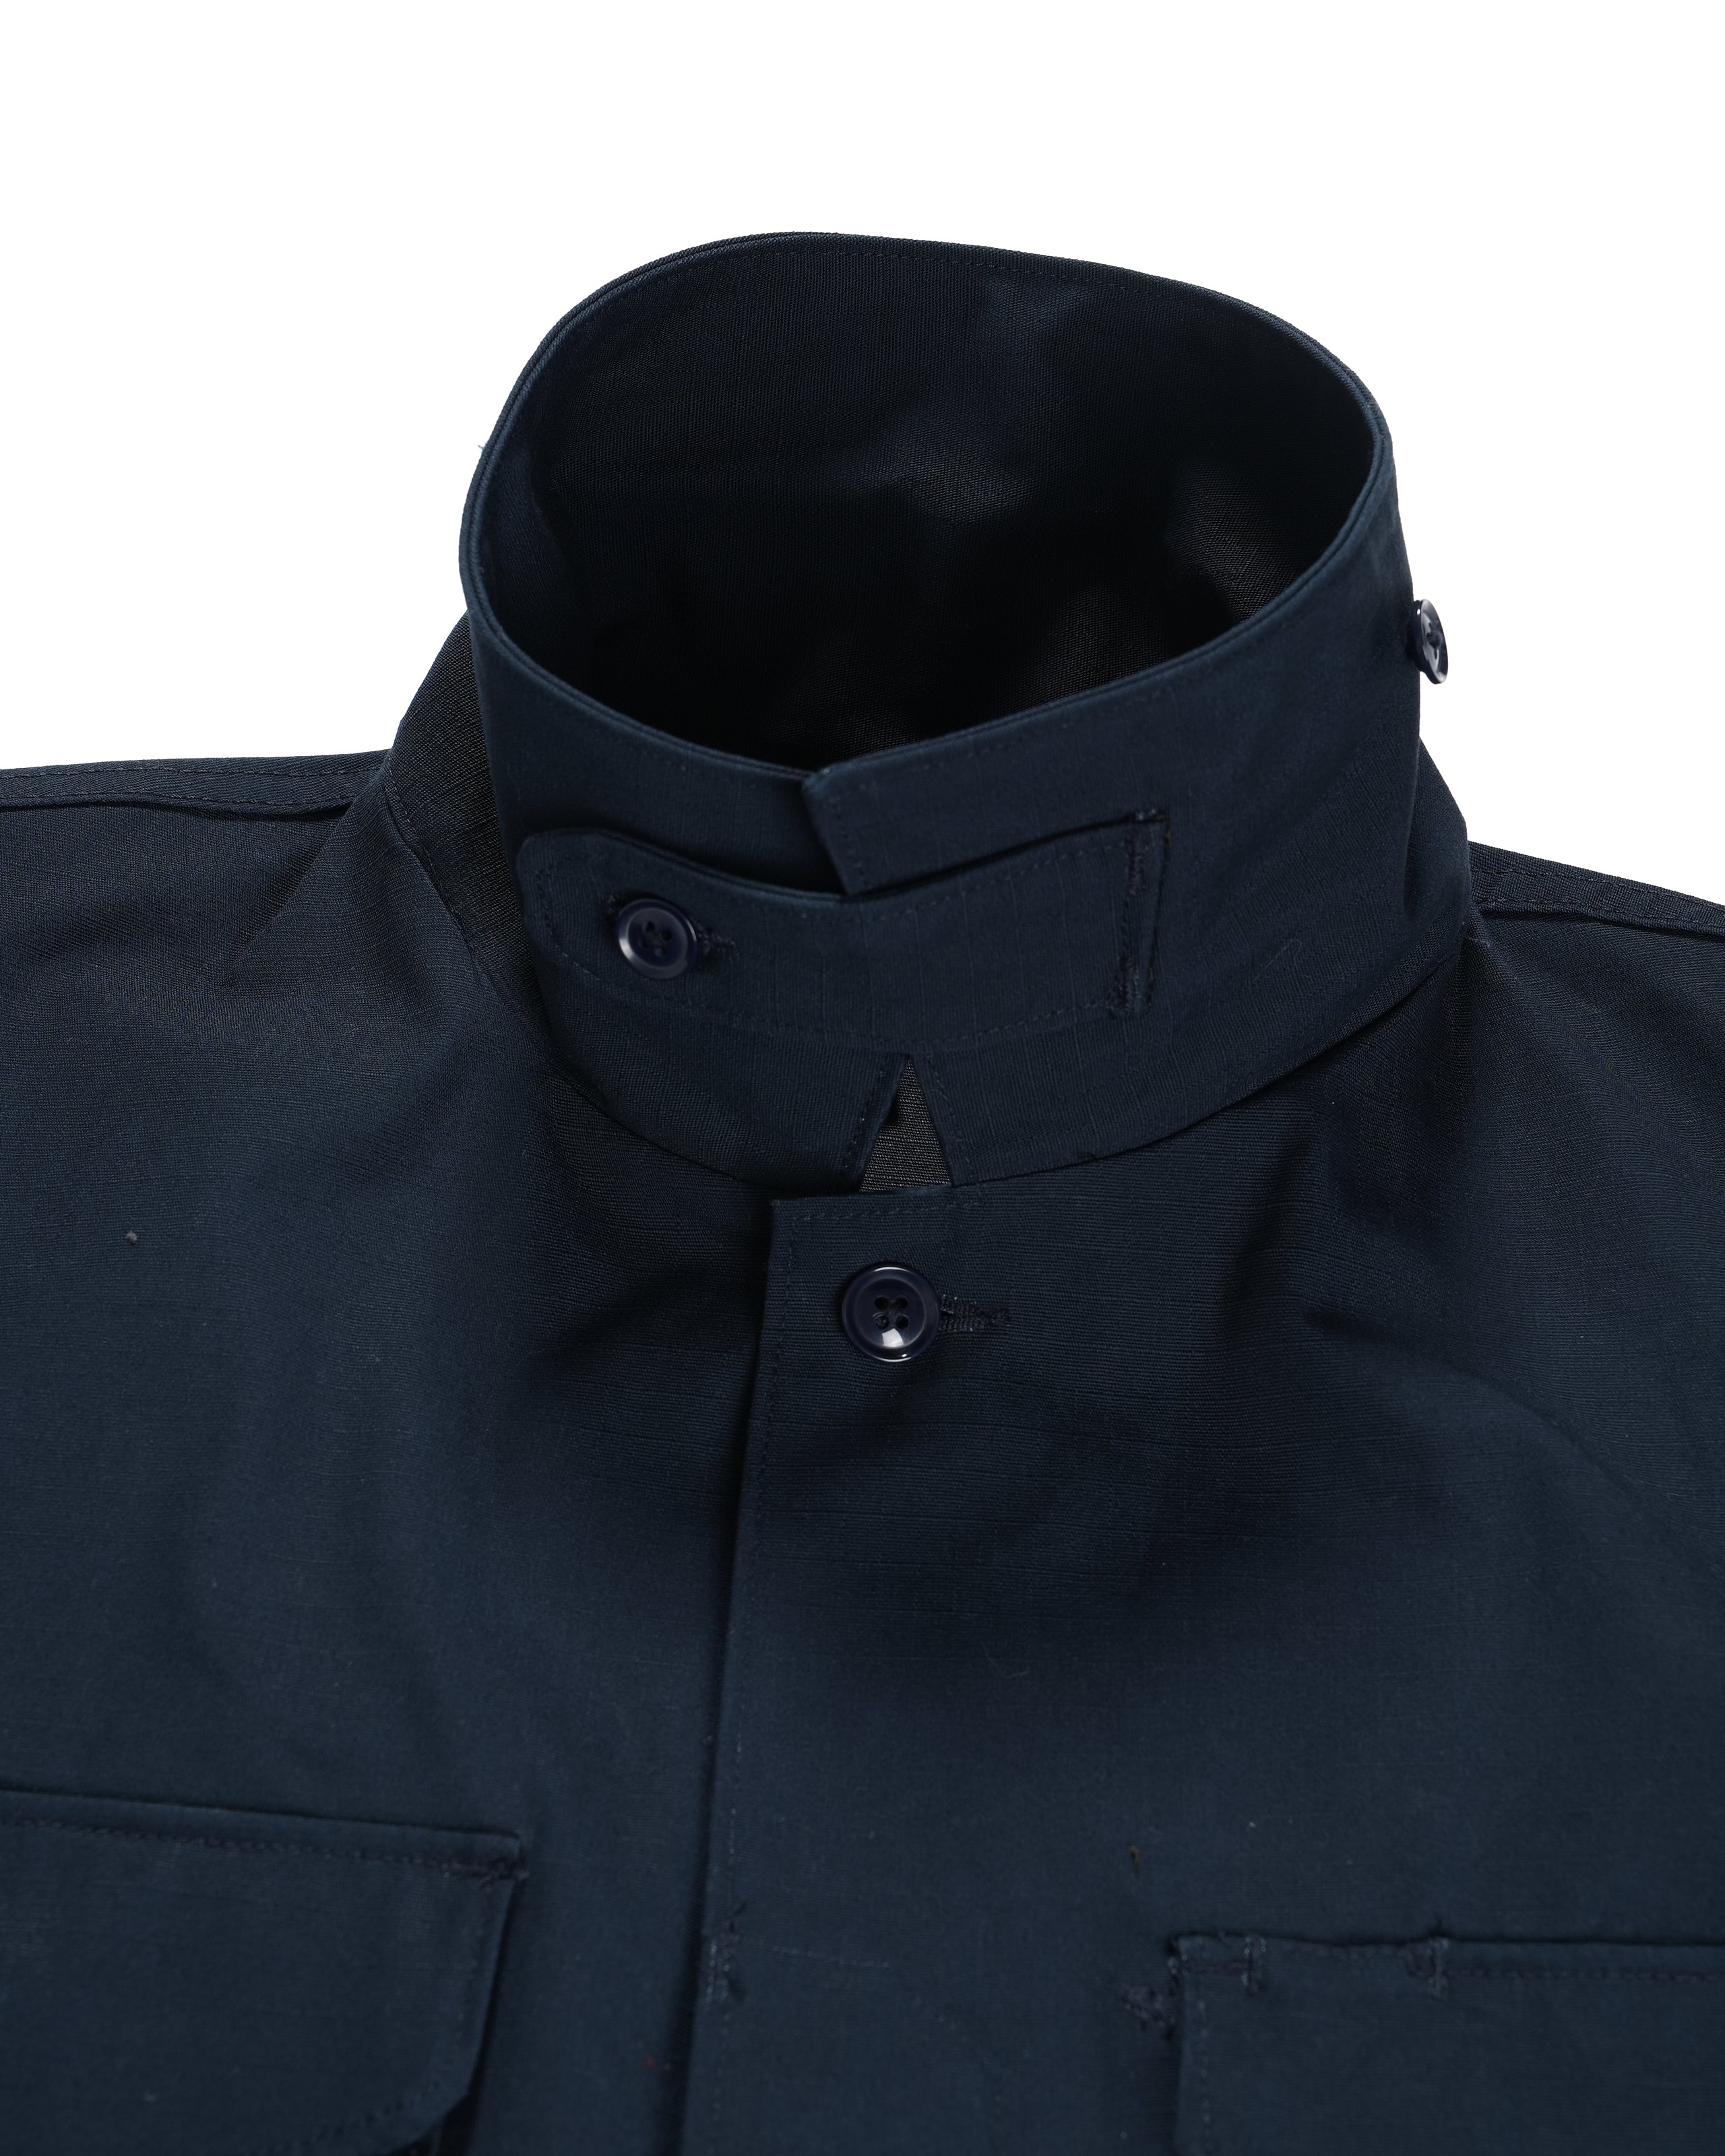 MC Shirt Jacket - Dark Navy Heavyweight Cotton Ripstop